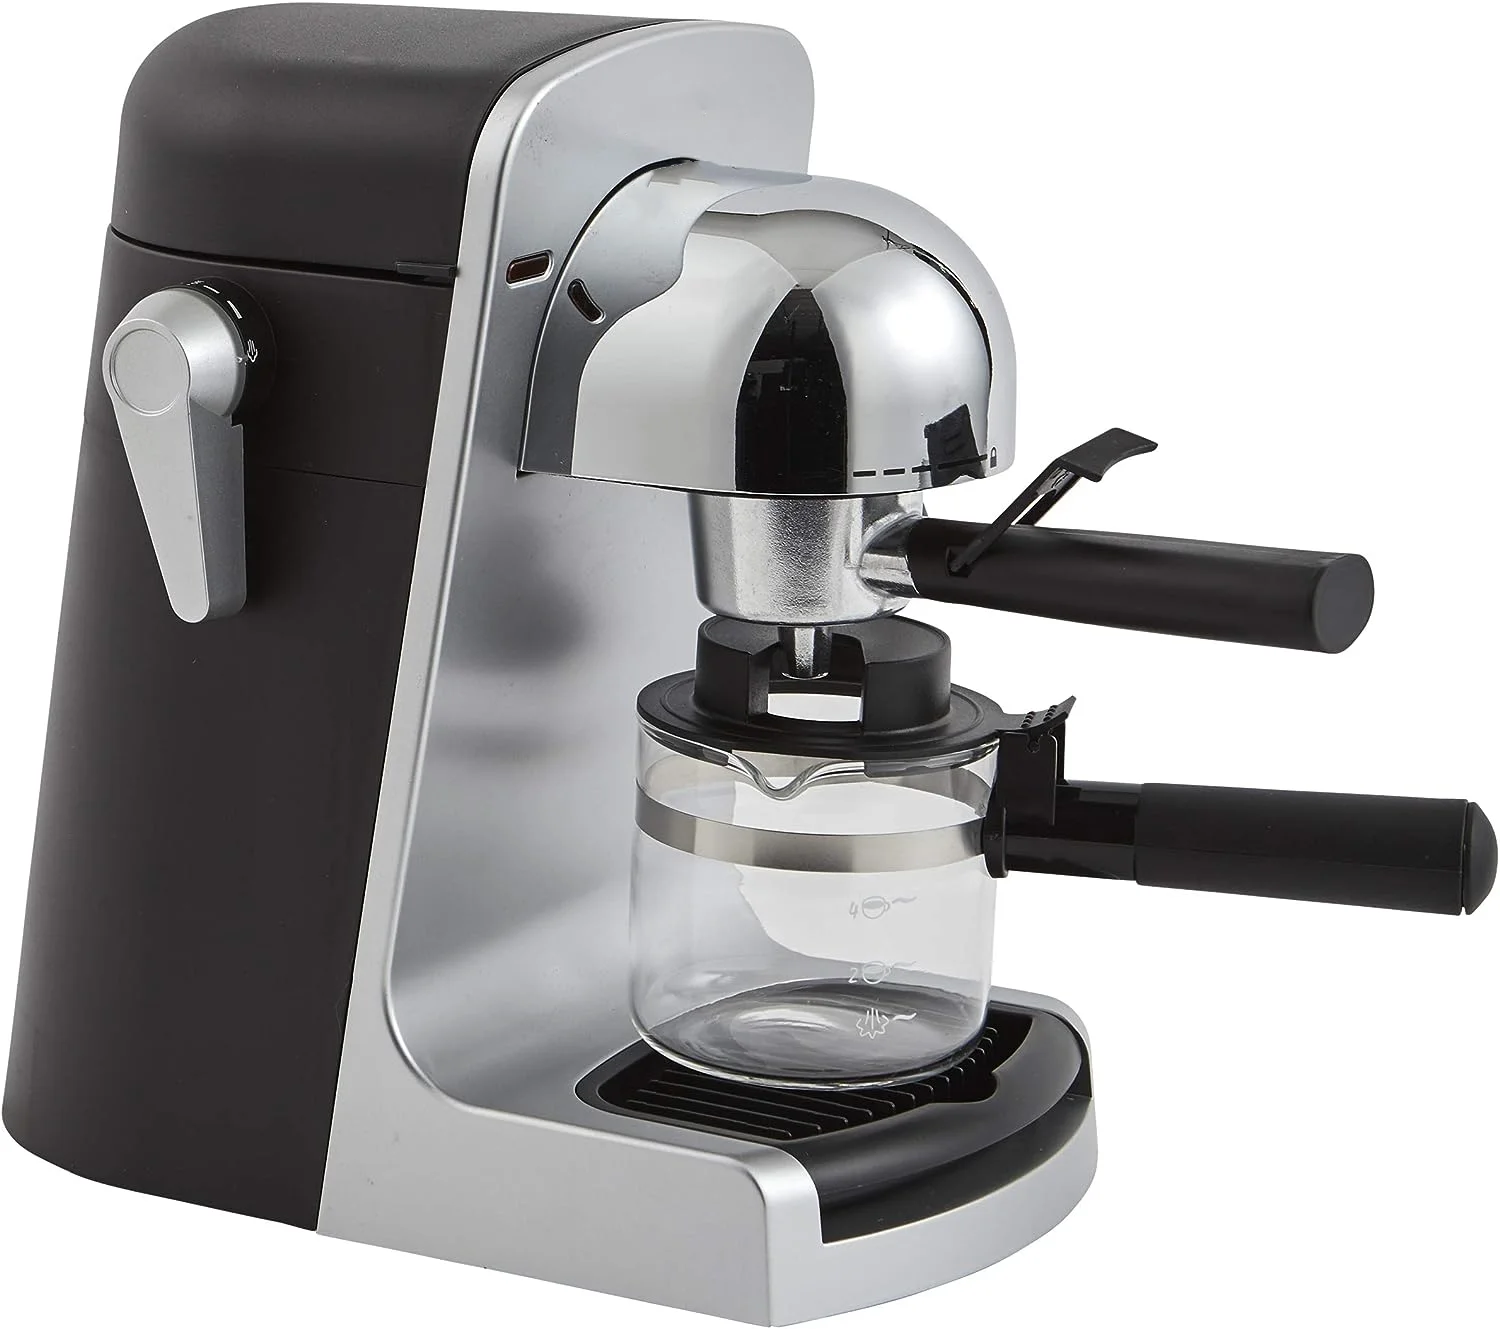 

GAU-18215 4 Cup Bistro Electric Espresso/Cappuccino Maker with Carafe, Silver Coffee bellows